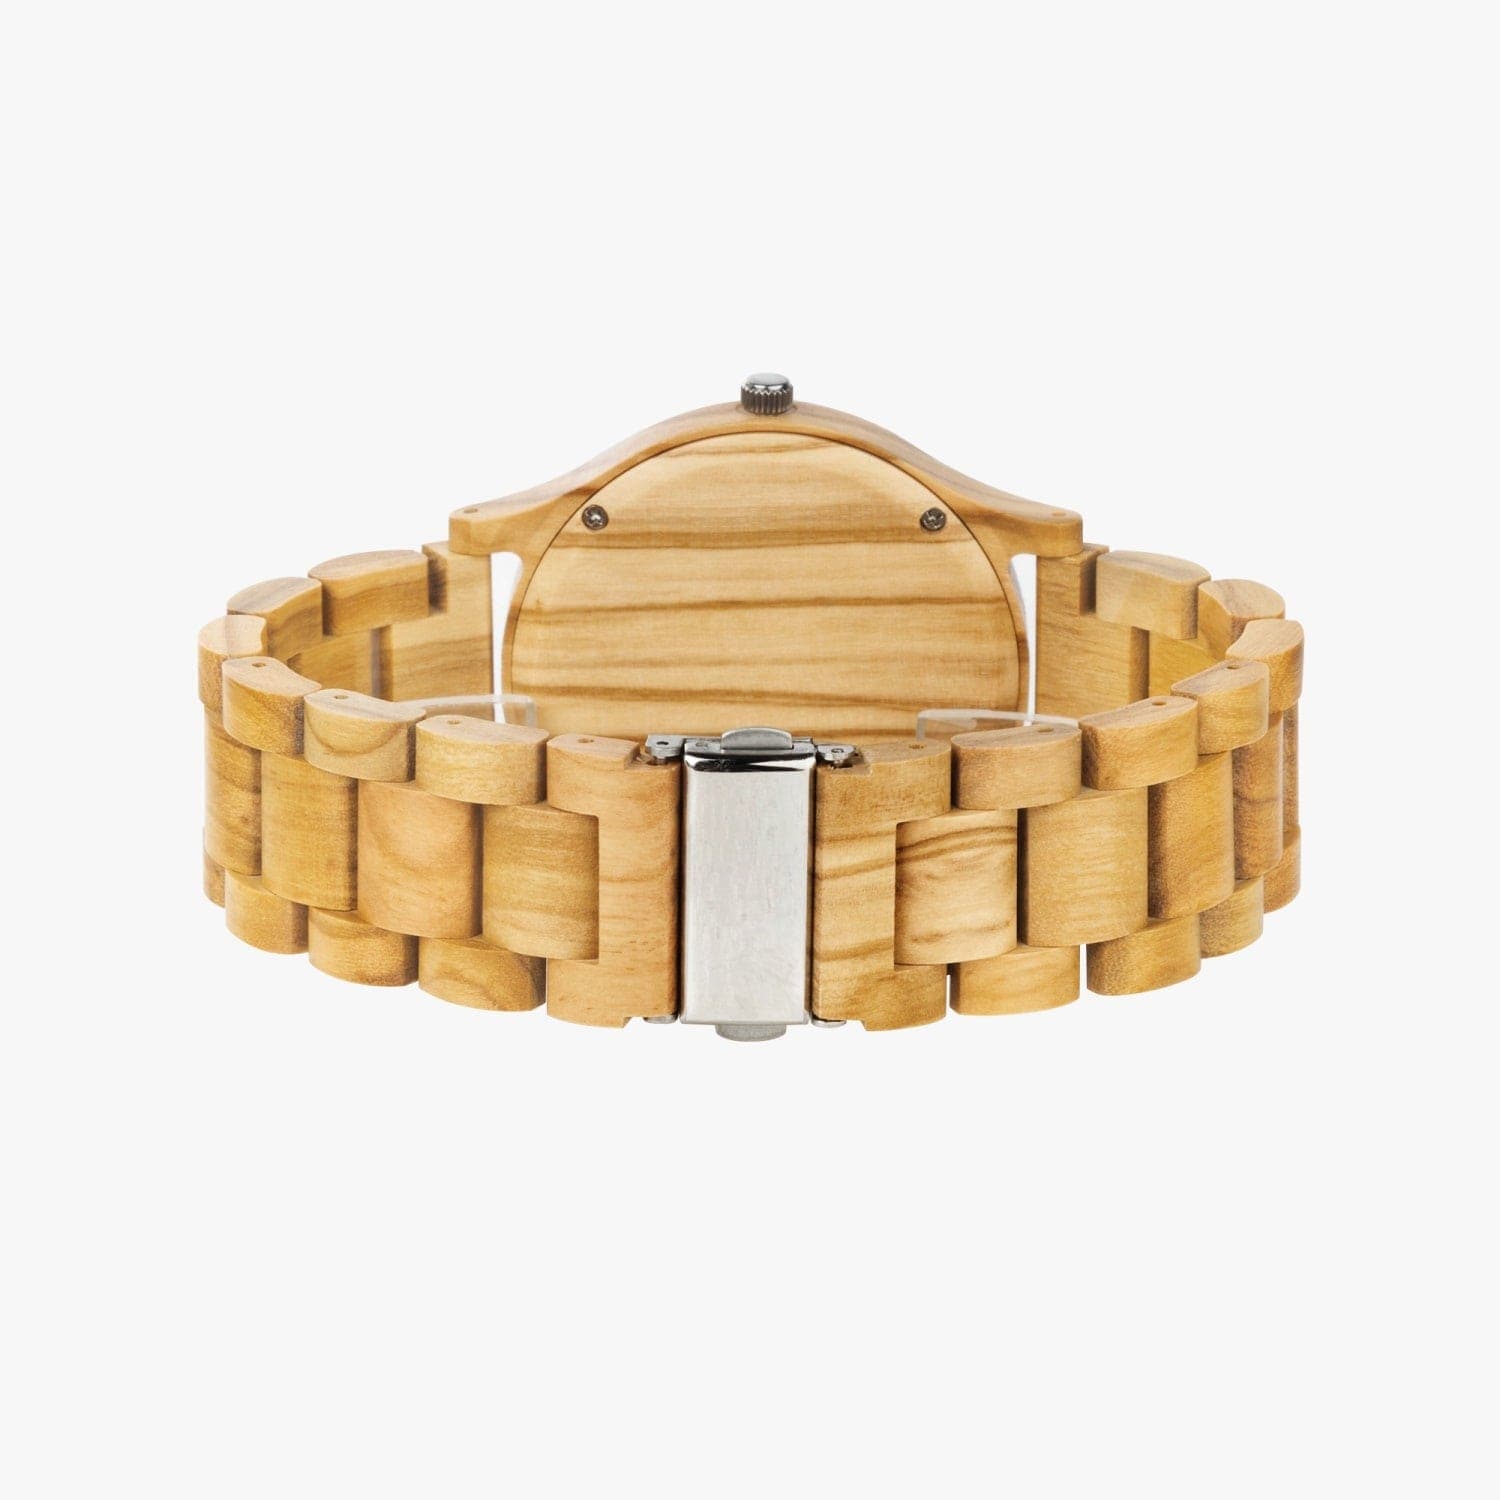 White lotus. Olive Lumber Wooden Watch, designed by Sensus Studio Design